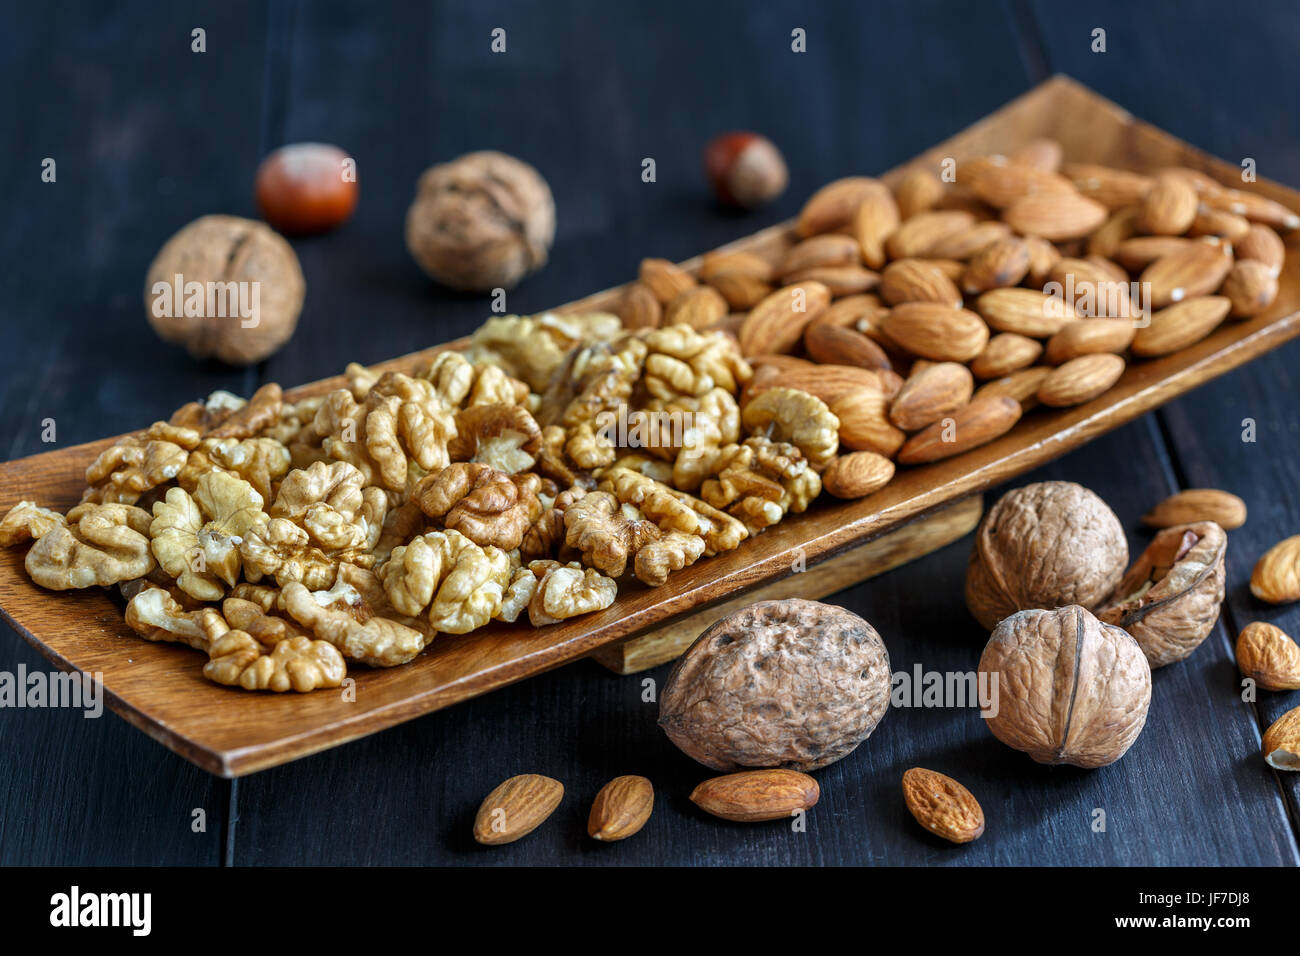 Peeled walnuts and almonds. Stock Photo